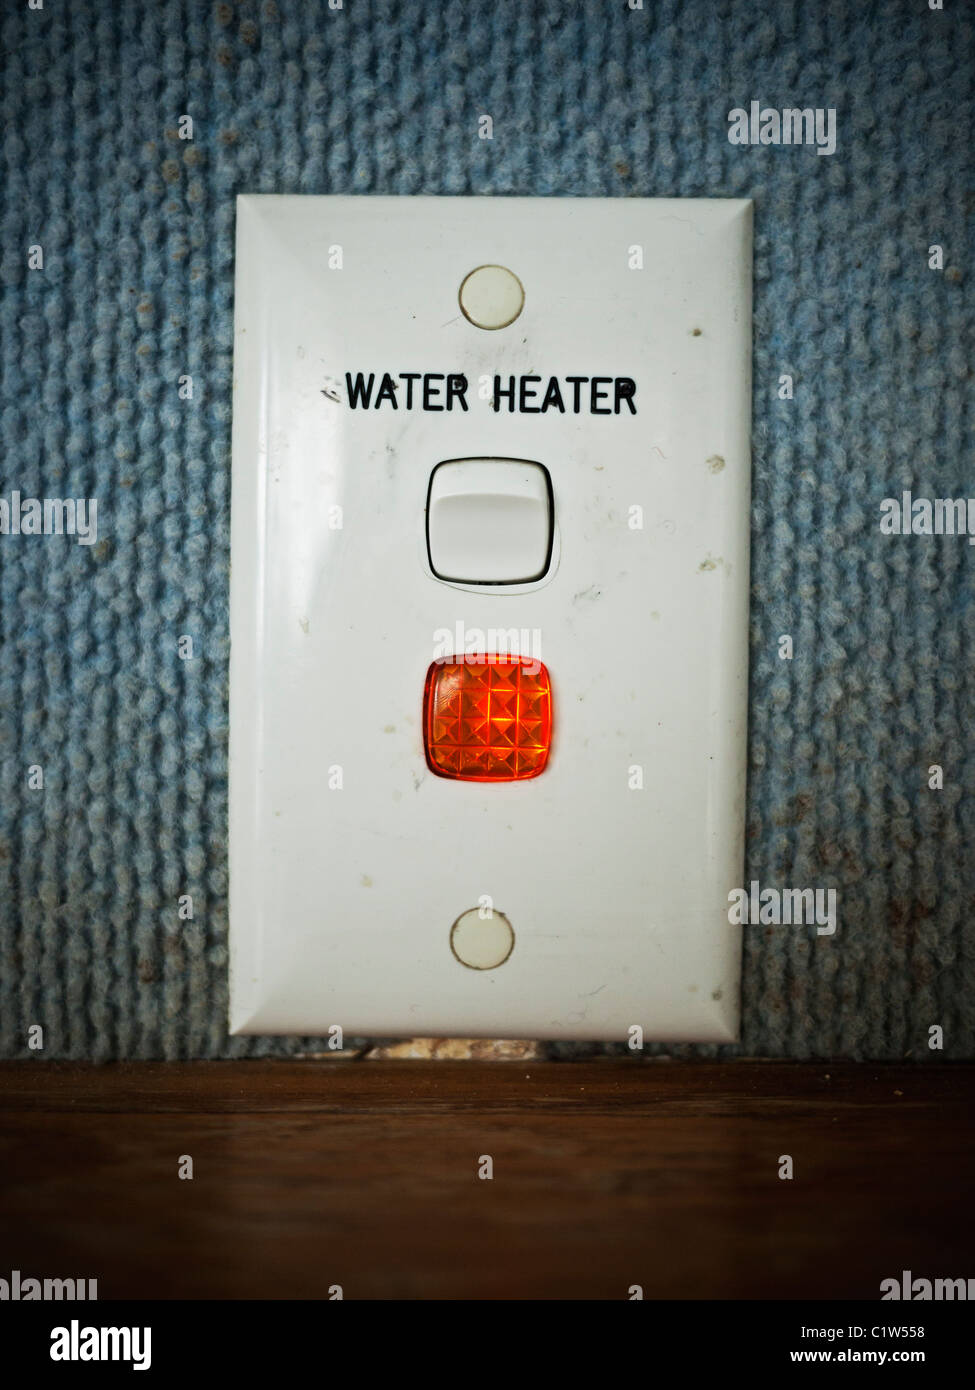 Water heater power switch Stock Photo